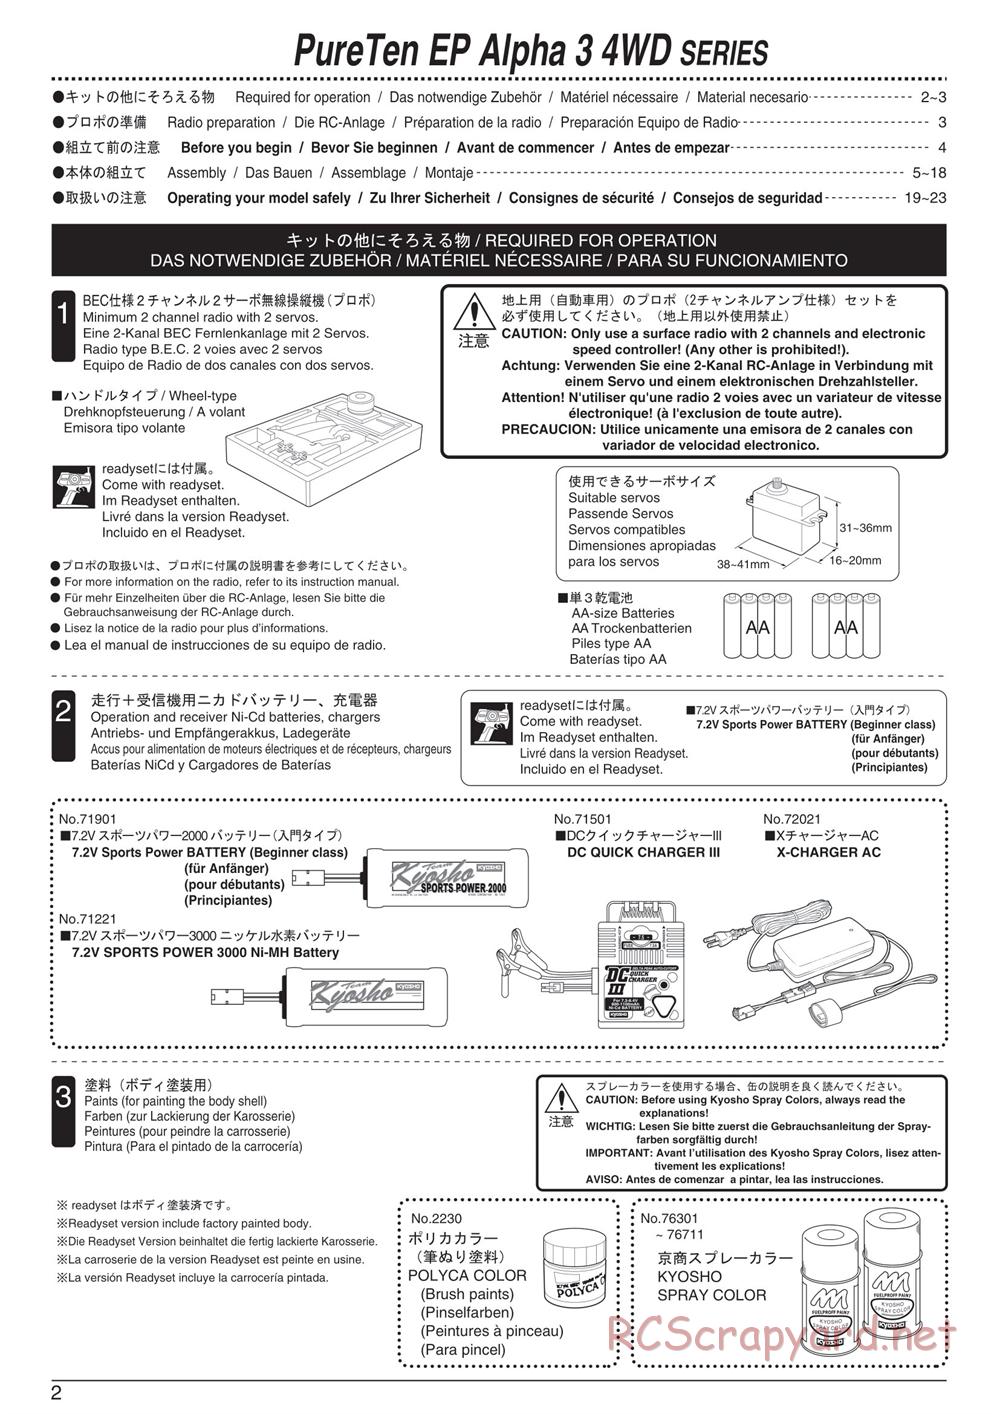 Kyosho - PureTen EP Alpha 3 - Manual - Page 2